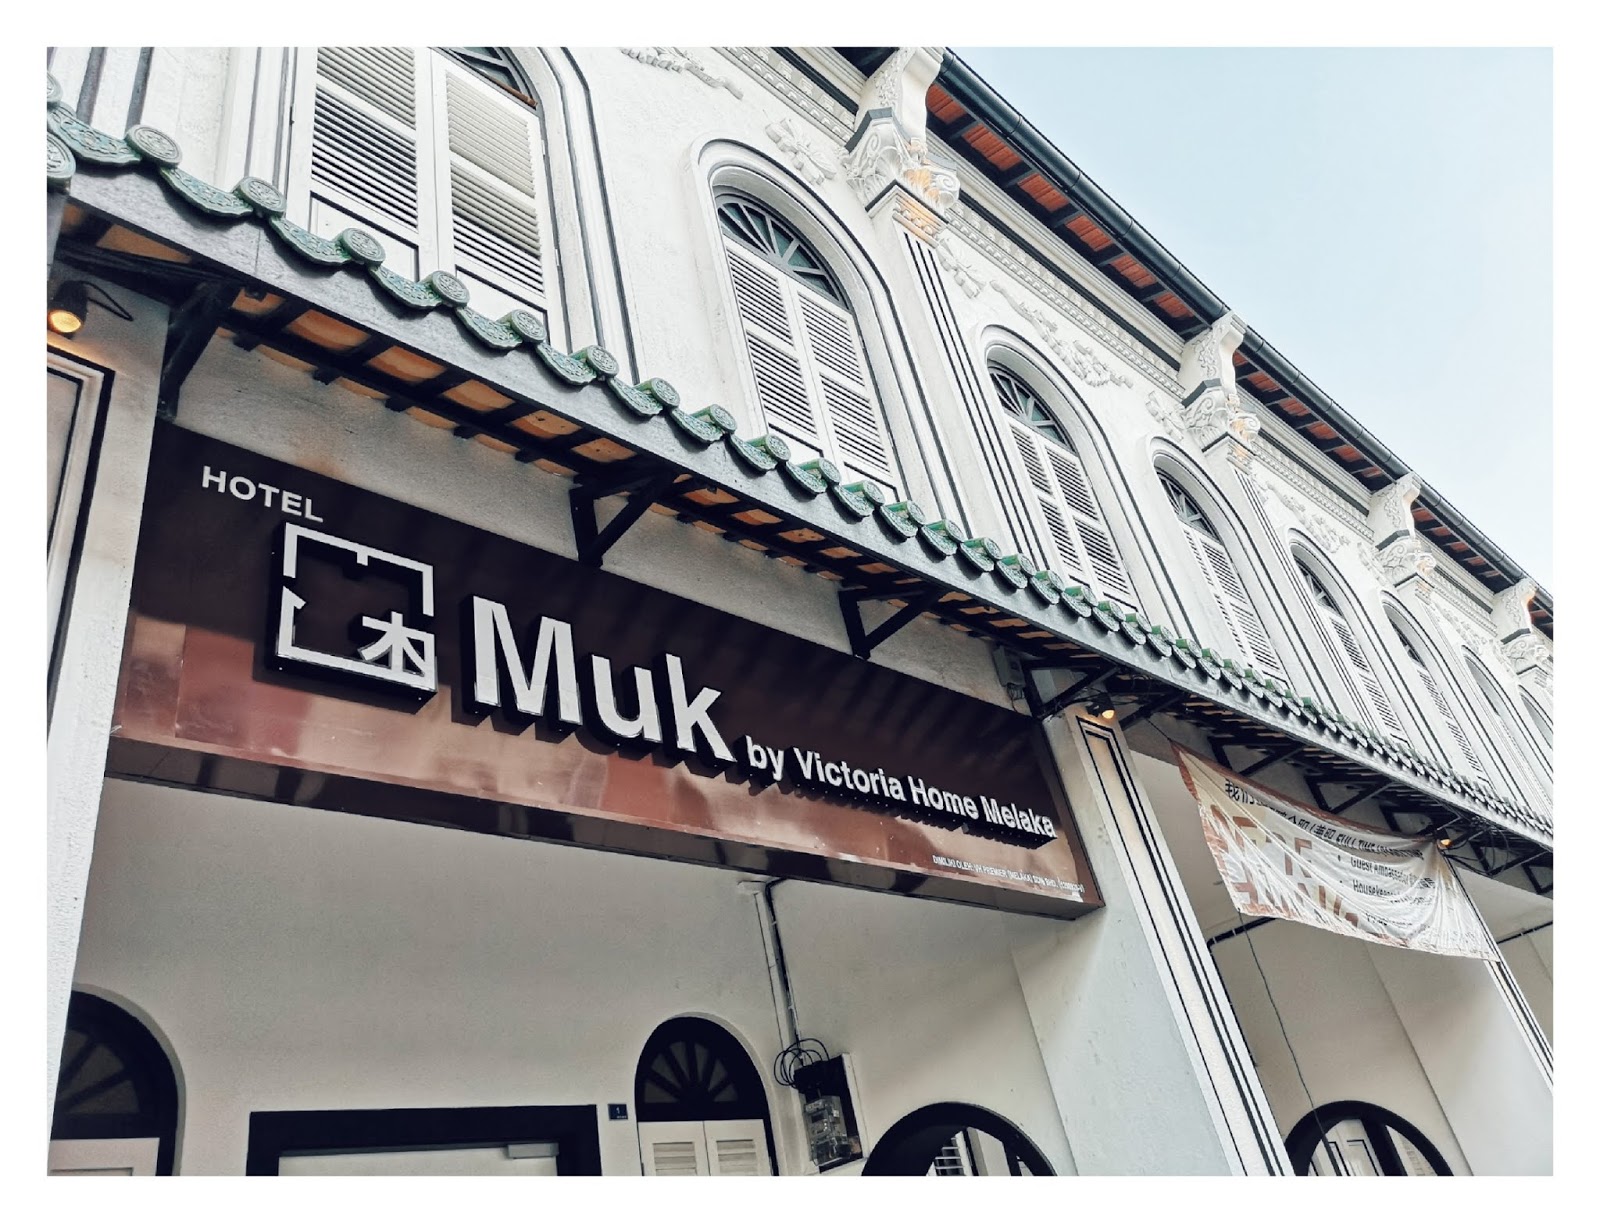 Muk By Victoria Home Melaka